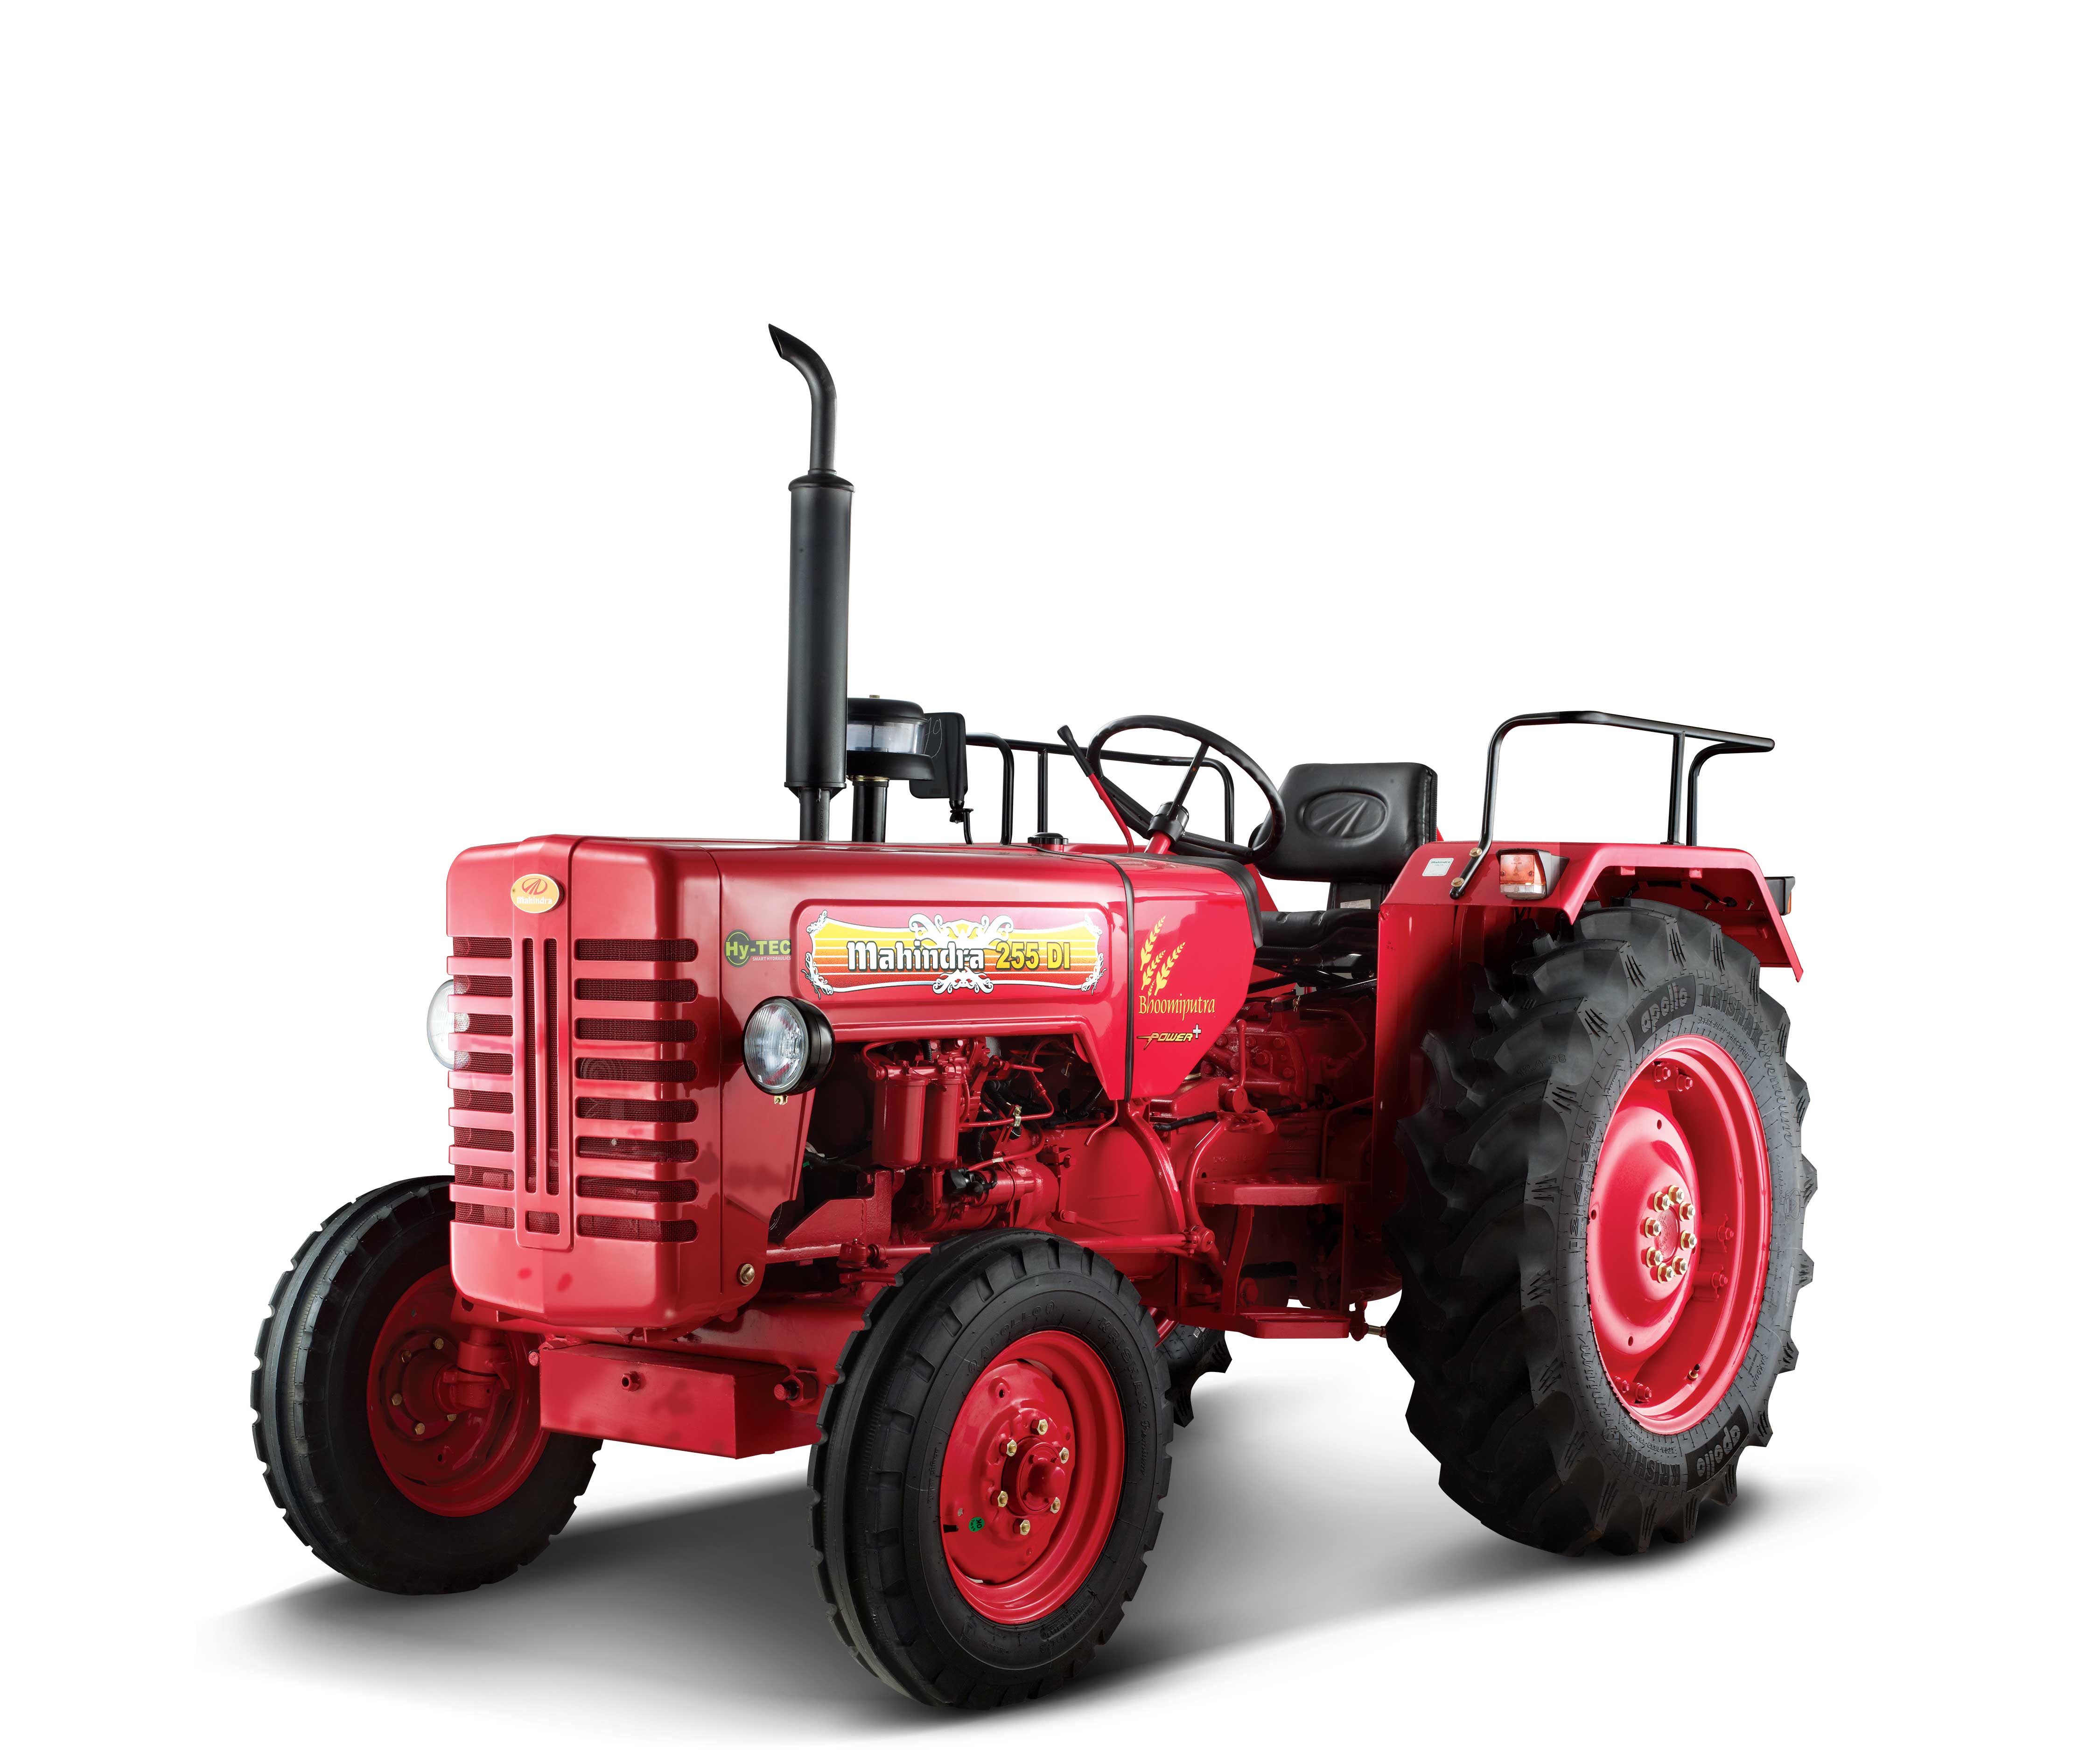 Mahindra Tractors launches the new Mahindra 255 DI PowerPlus 25 HP 